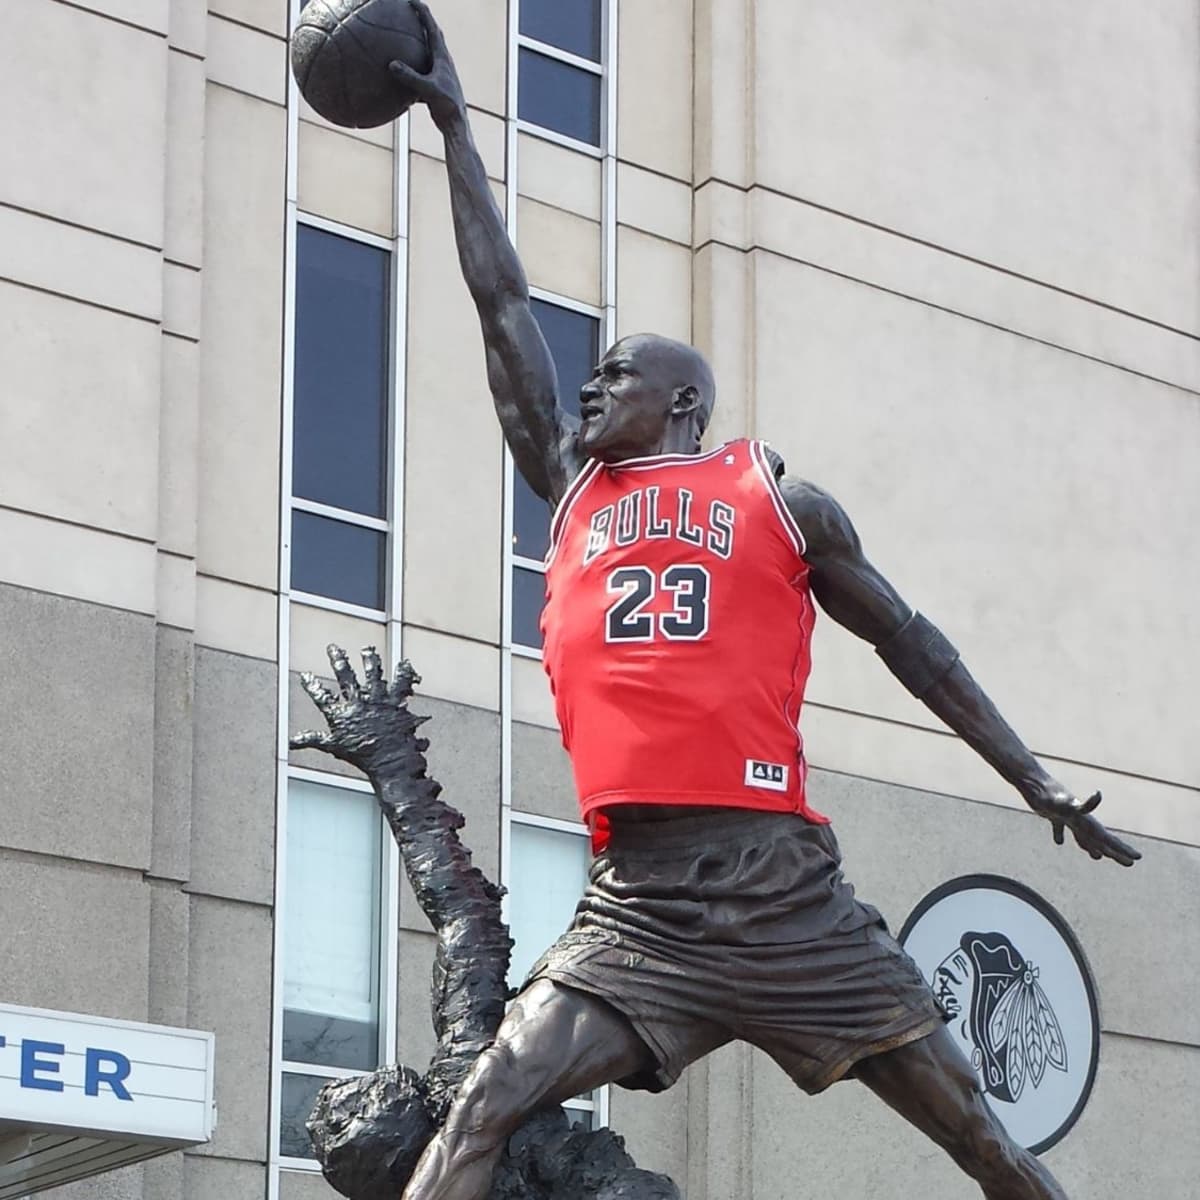 Michael Jordan's six championship Bulls teams, ranked